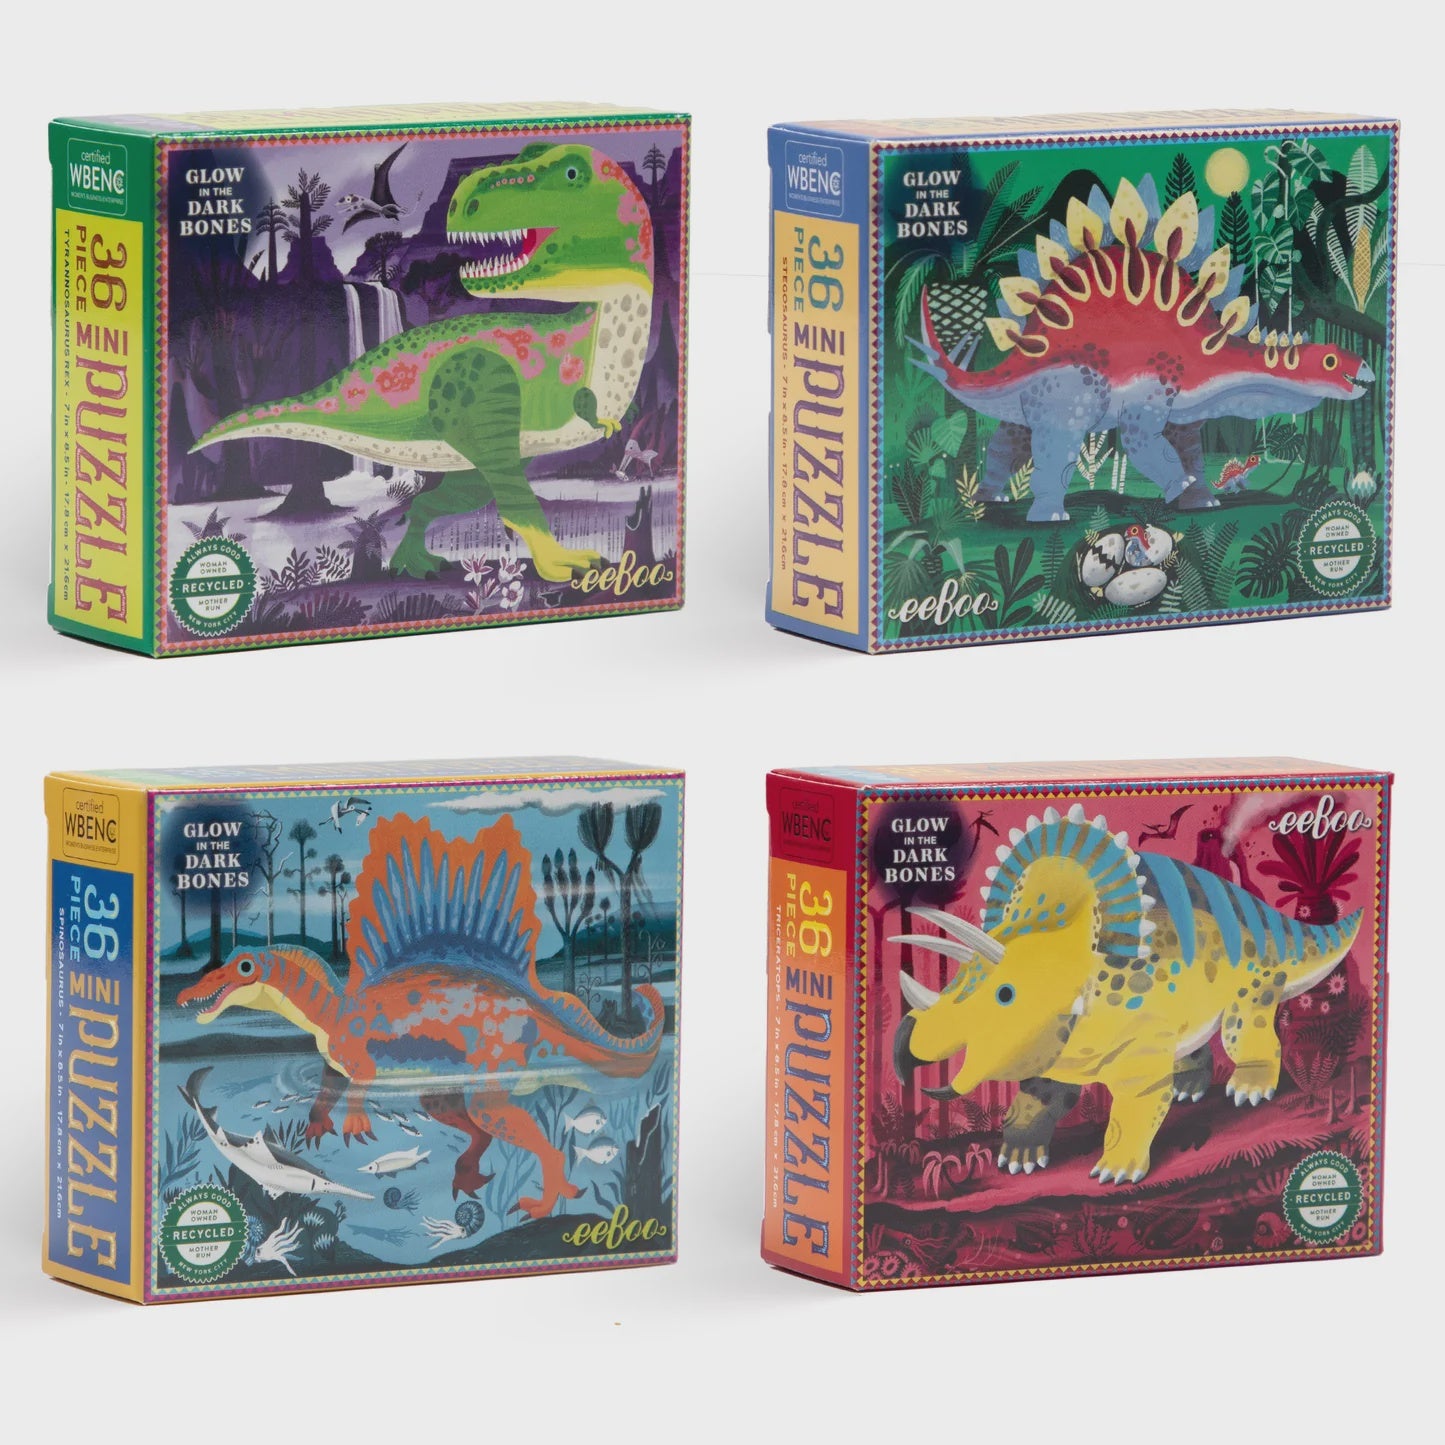 36 Piece Mini Puzzles - Dinosaurs (Glow in the Dark Bones!)